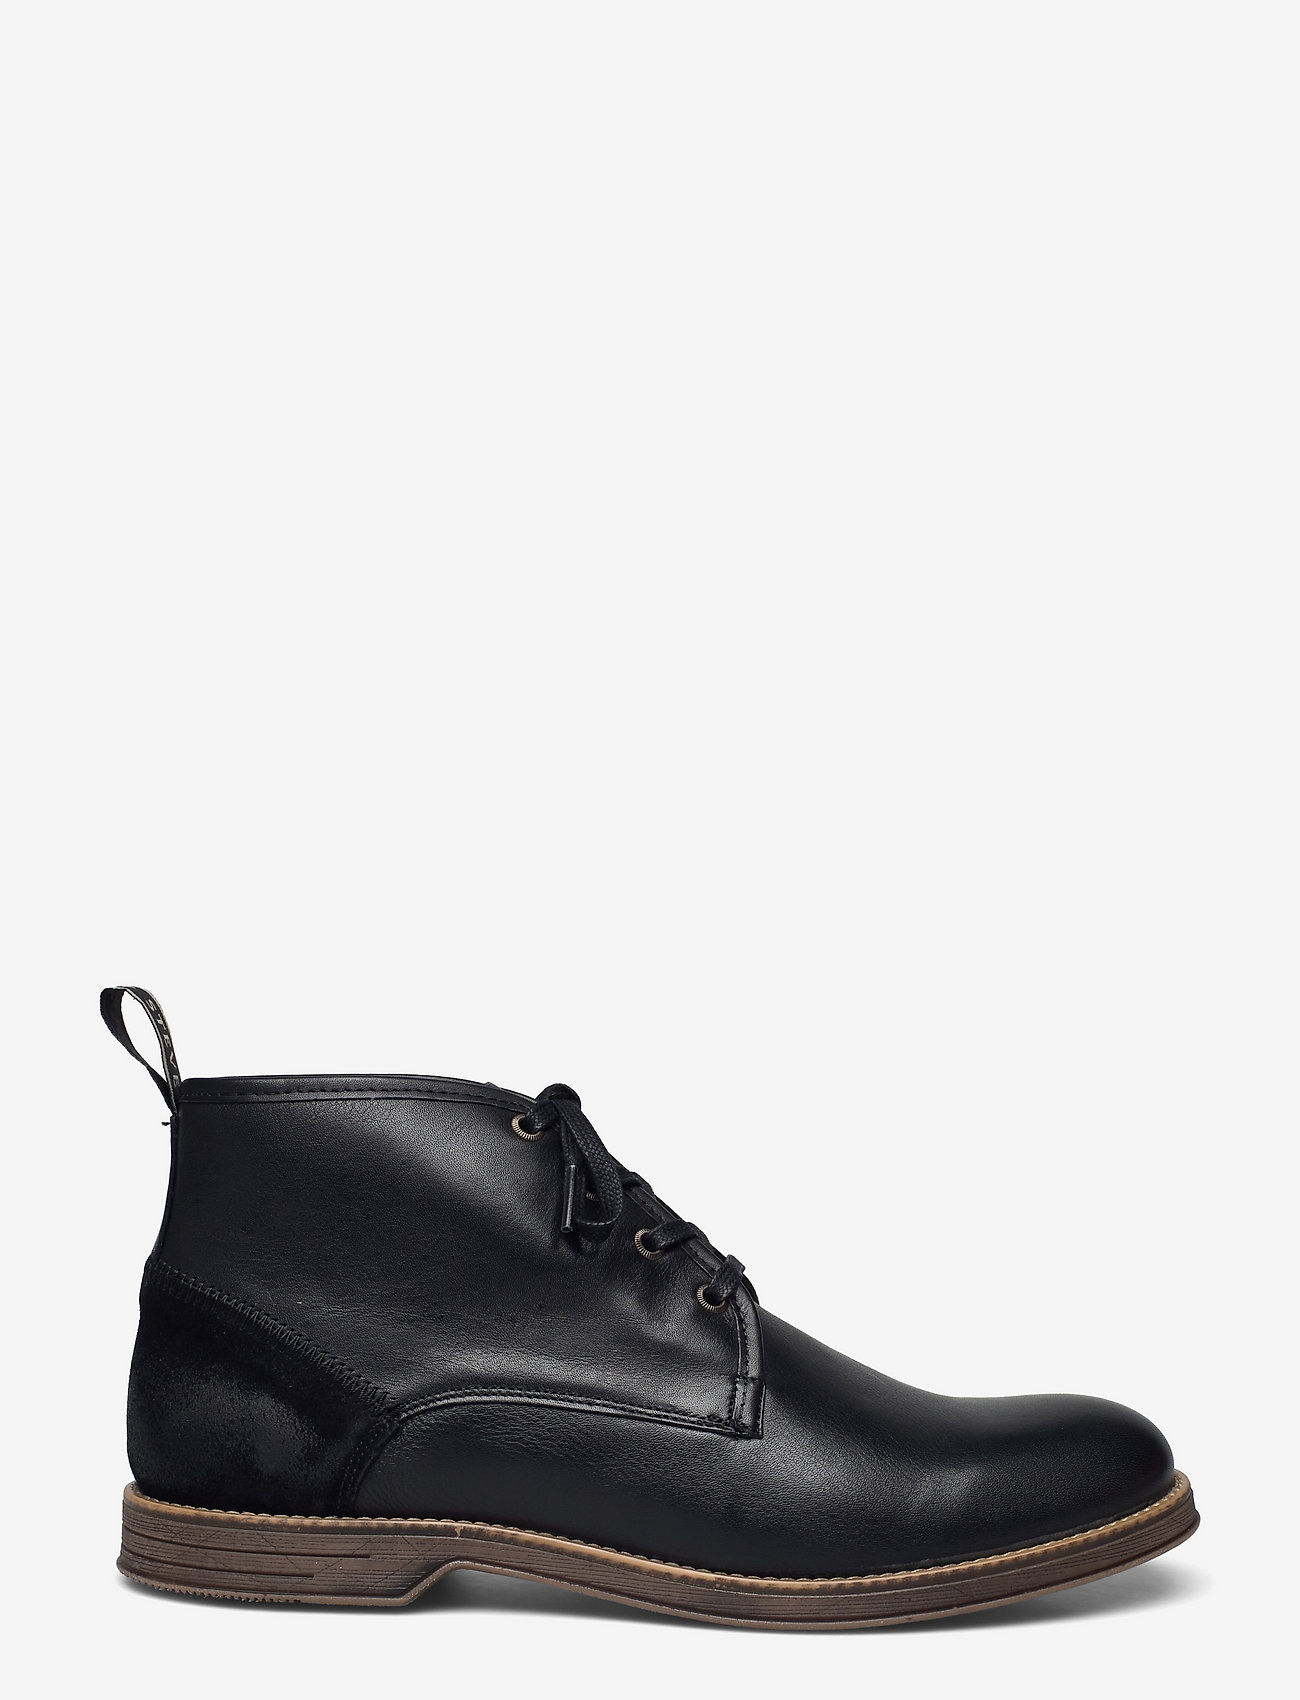 Sneaky Steve - Nick Leather Shoe - støvler med snøre - black - 1